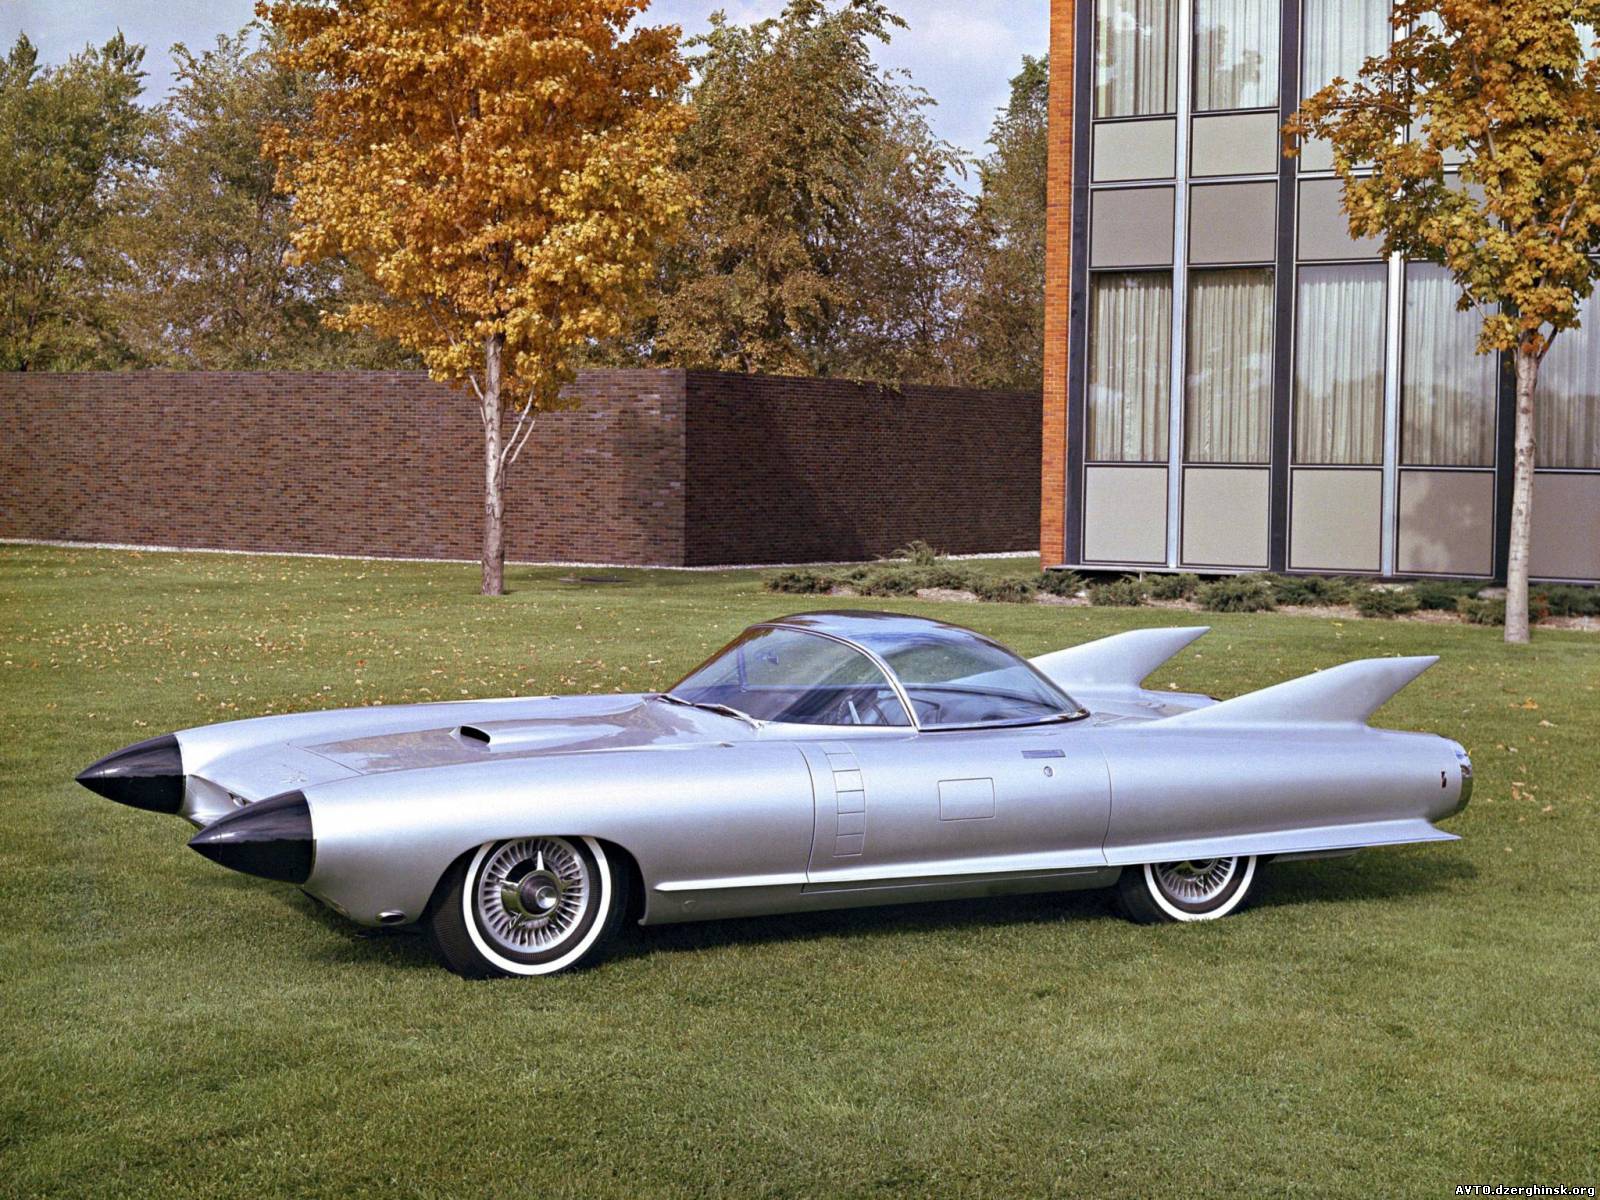 057. Cadillac Cyclone Concept Car 1959